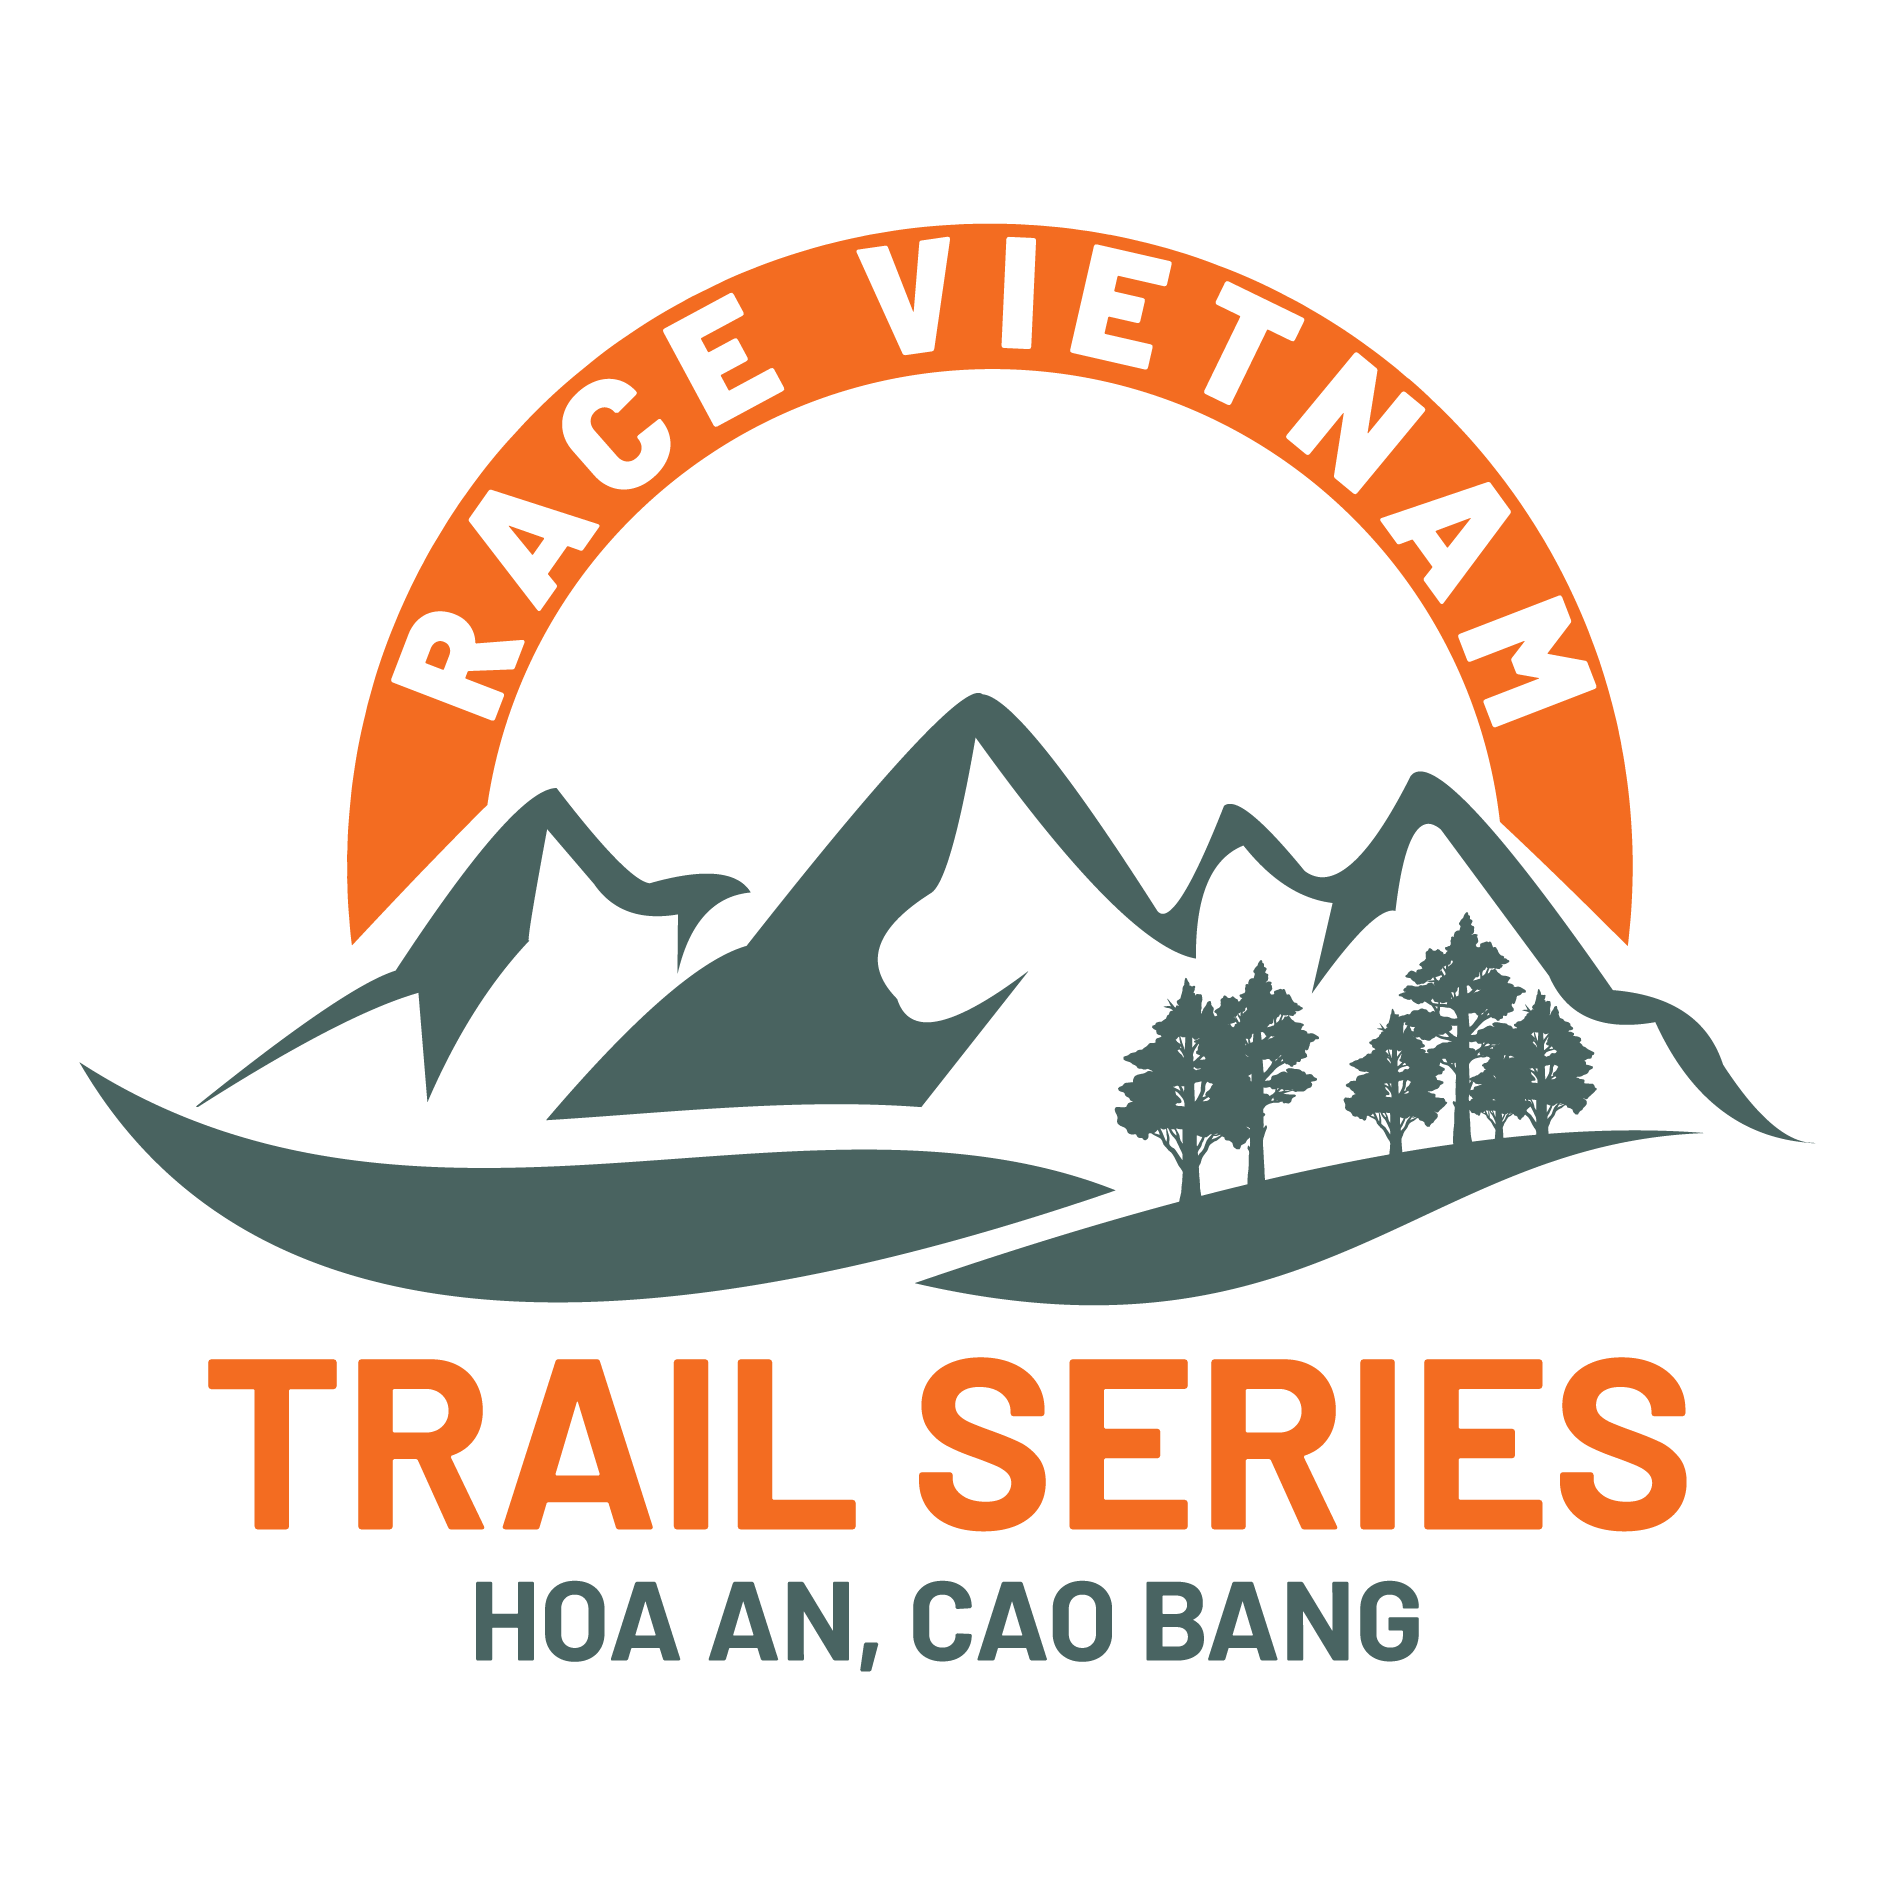 Race Vietnam Trail Series Hoa An, Cao Bang 2023 